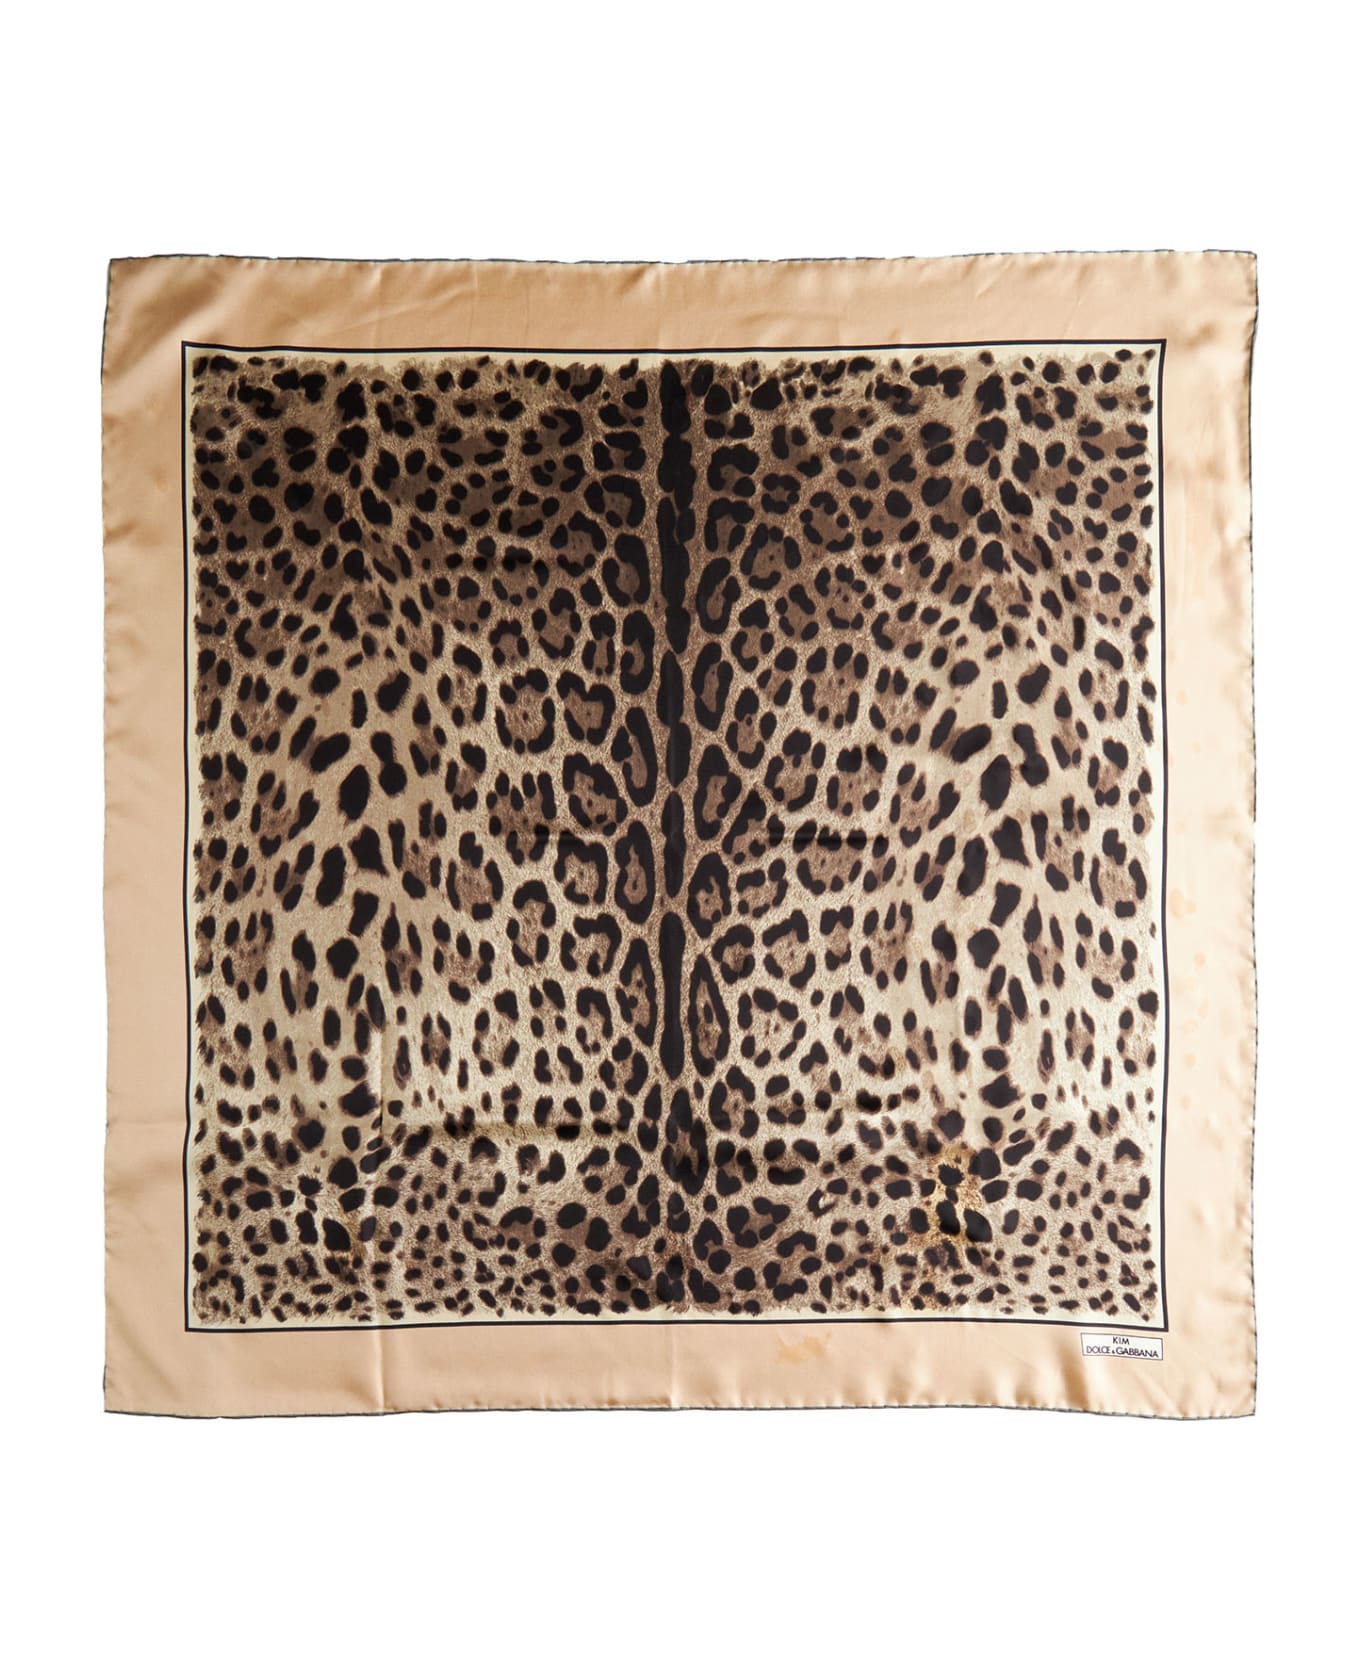 Dolce & Gabbana Leopard-print Twill Scarf - Leo bordo nudo